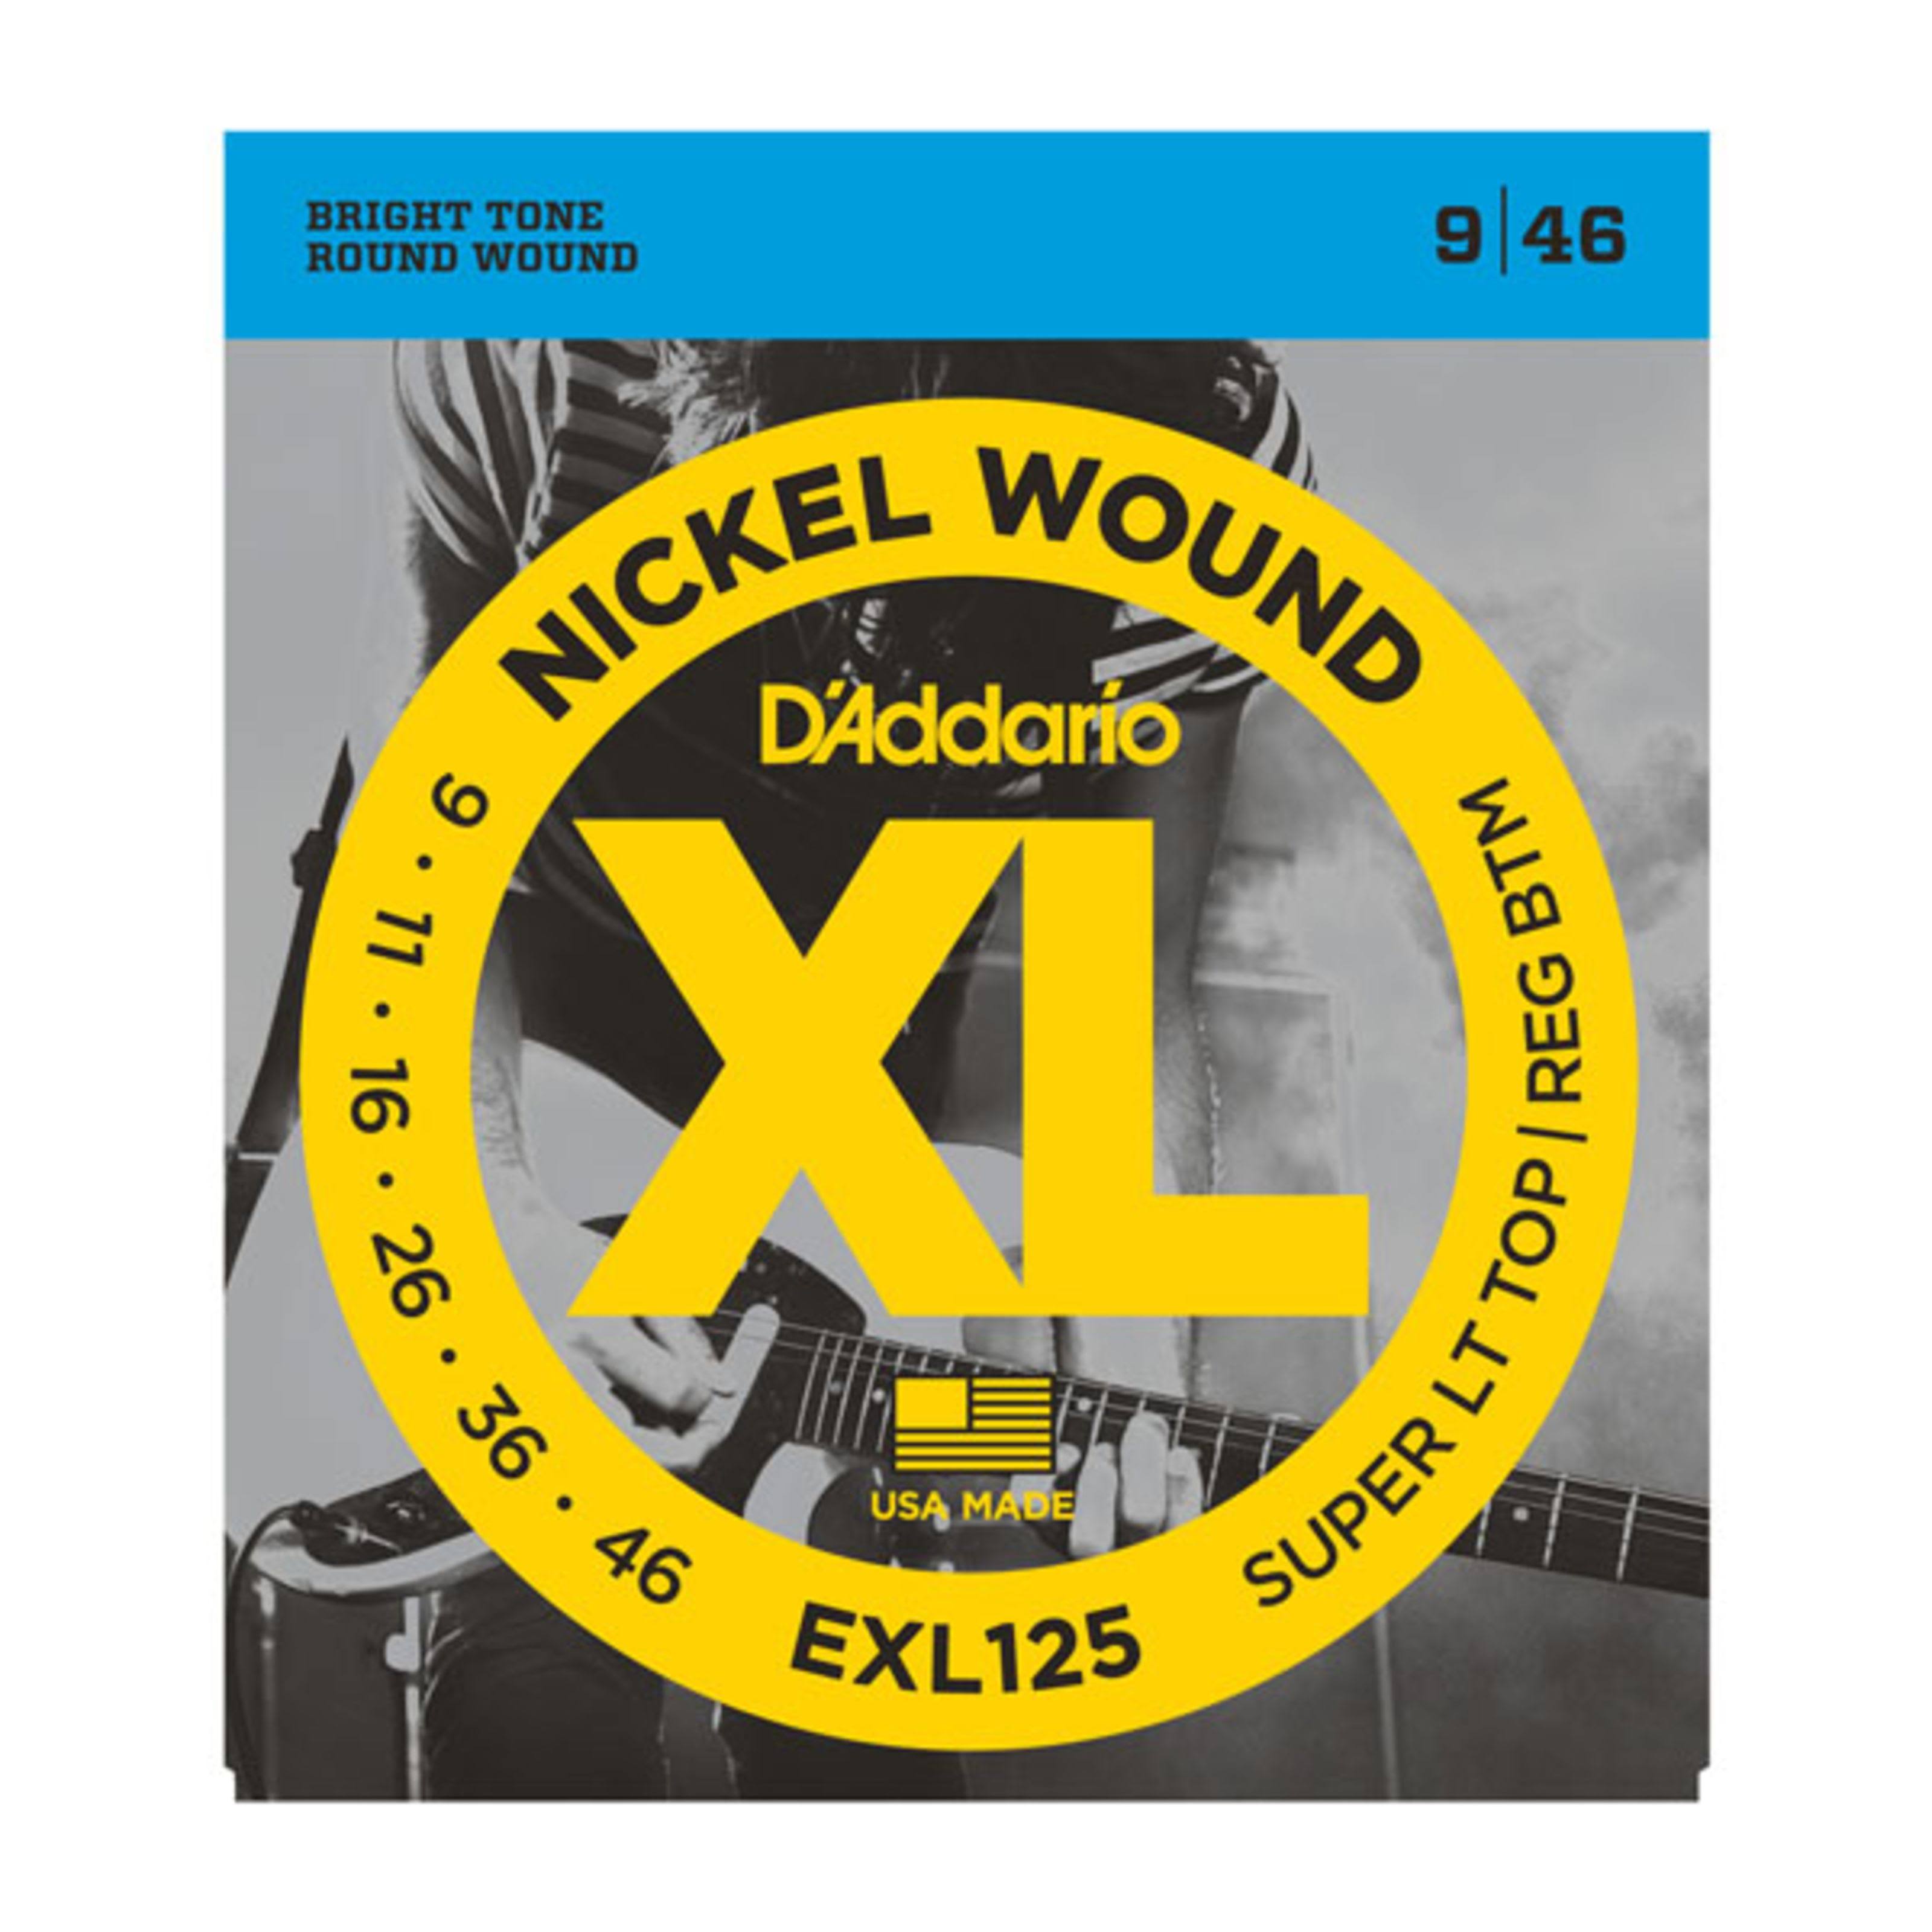 D'addario Exl125 Nickel Wound Electric Guitar Strings - Super Light Top/Regular Bottom, 9-46